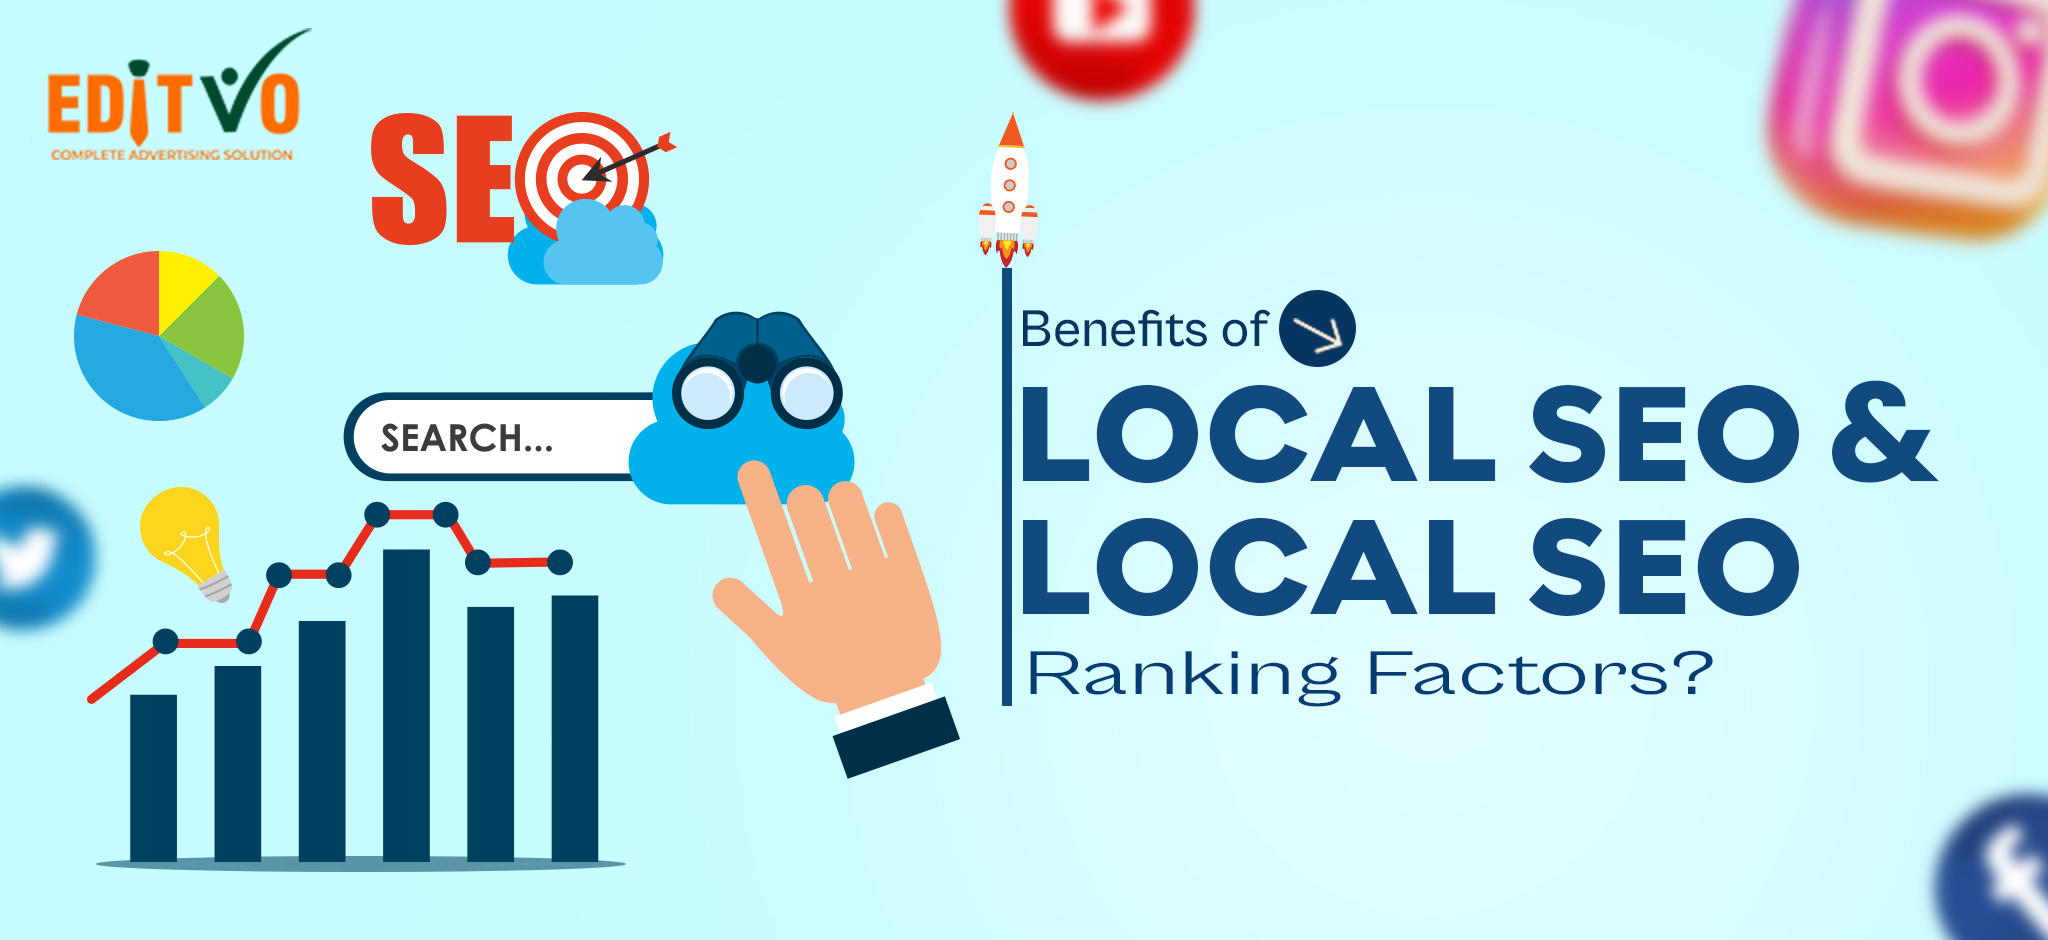 Benefits of Local SEO & Local SEO Ranking Factors